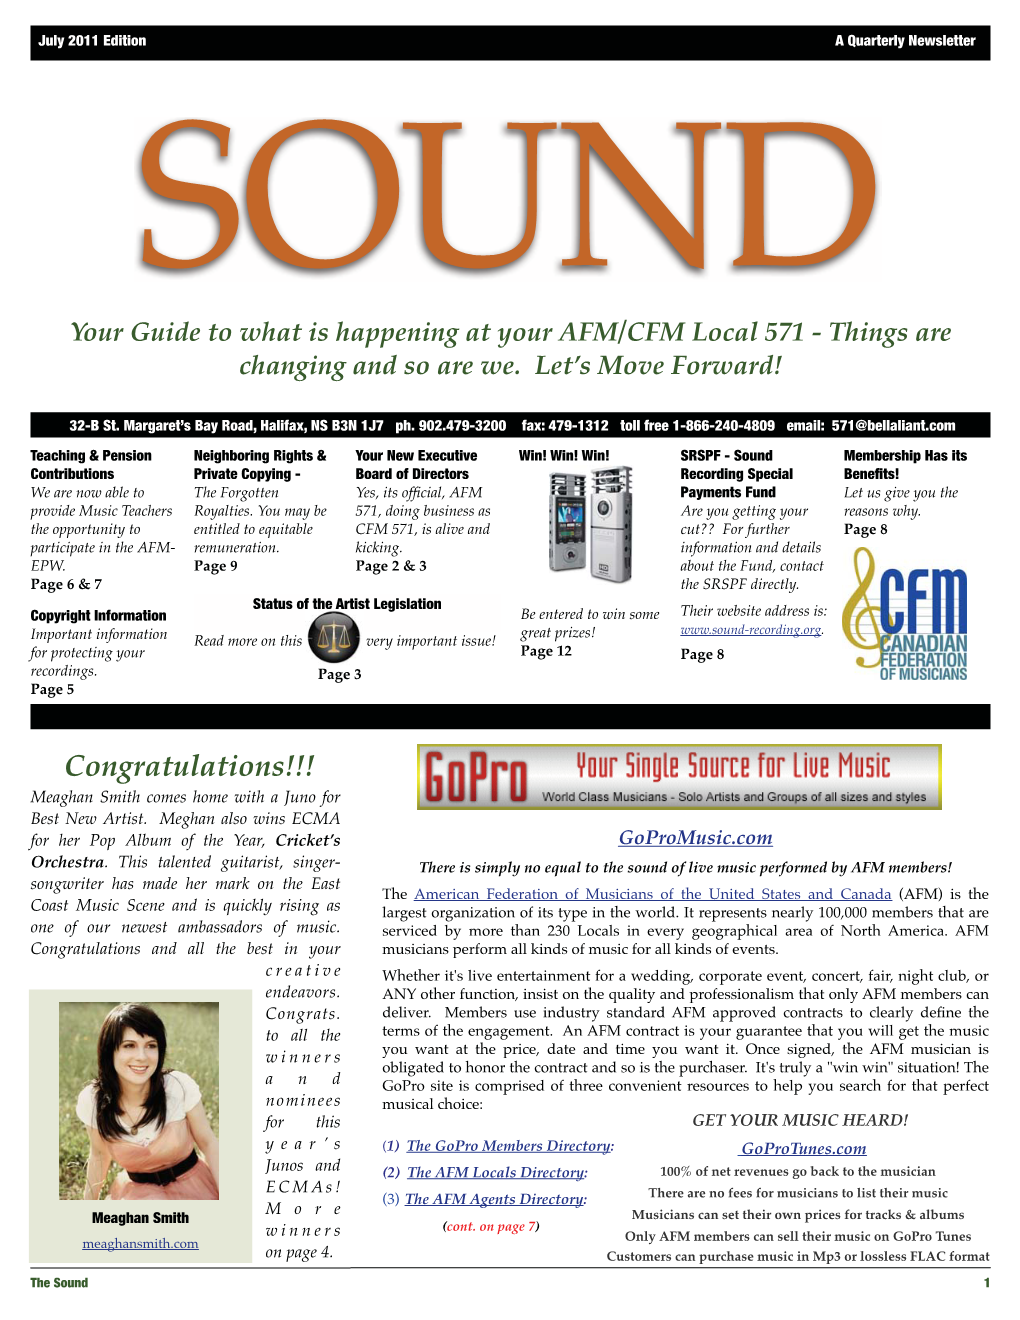 The Sound Newsletter July 2011